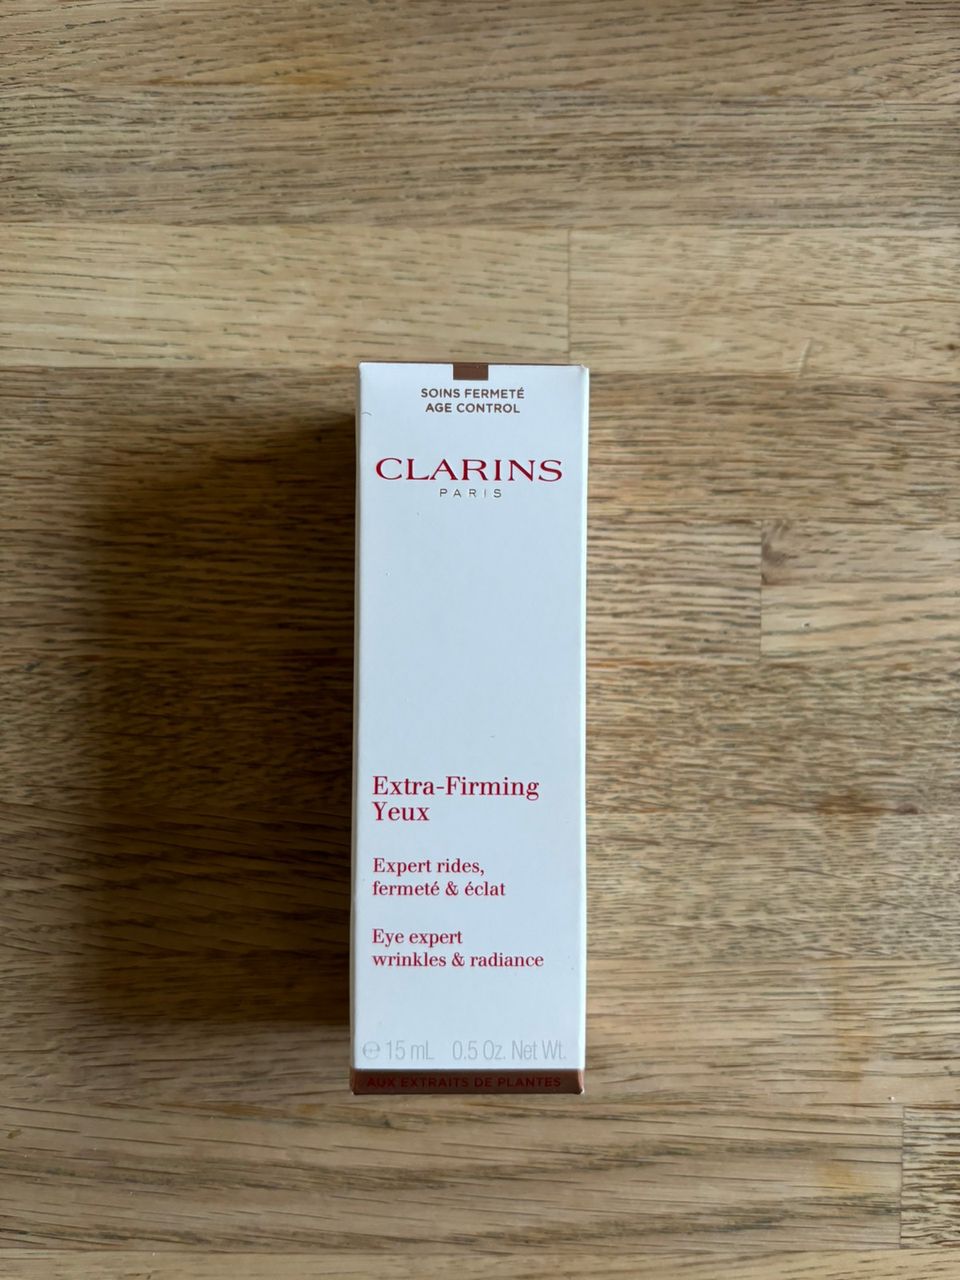 Clarins Extra-Firming Eye expert 15ml